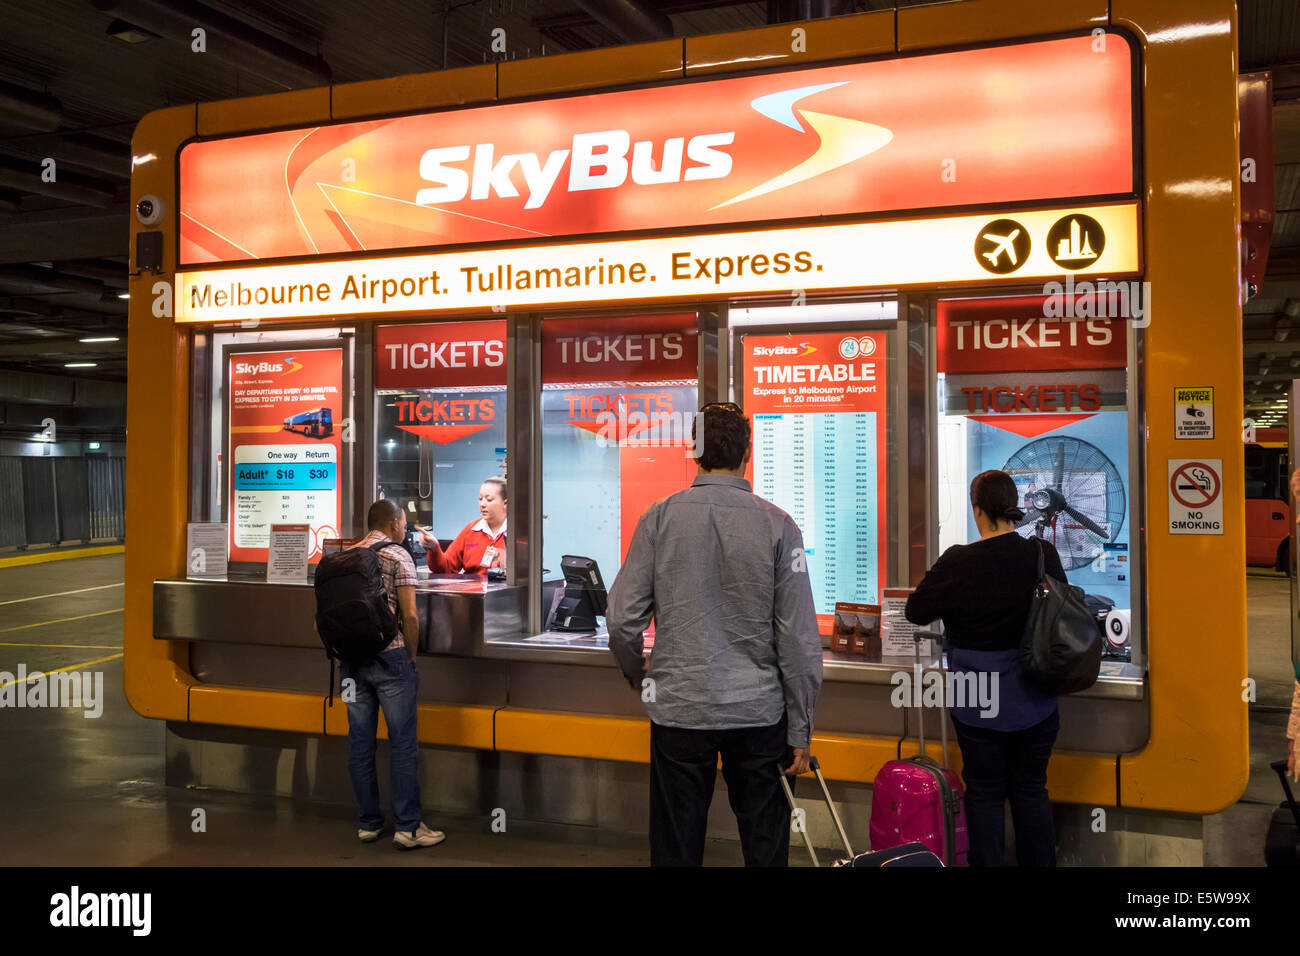 Melbourne Australien, Southern Cross Station, Skybus, Ticketfenster, Stand, Kunden, Transaktionszahlung zahlt Kaufkäufe, Flughafenbus, Bus, AU140323004 Stockfoto